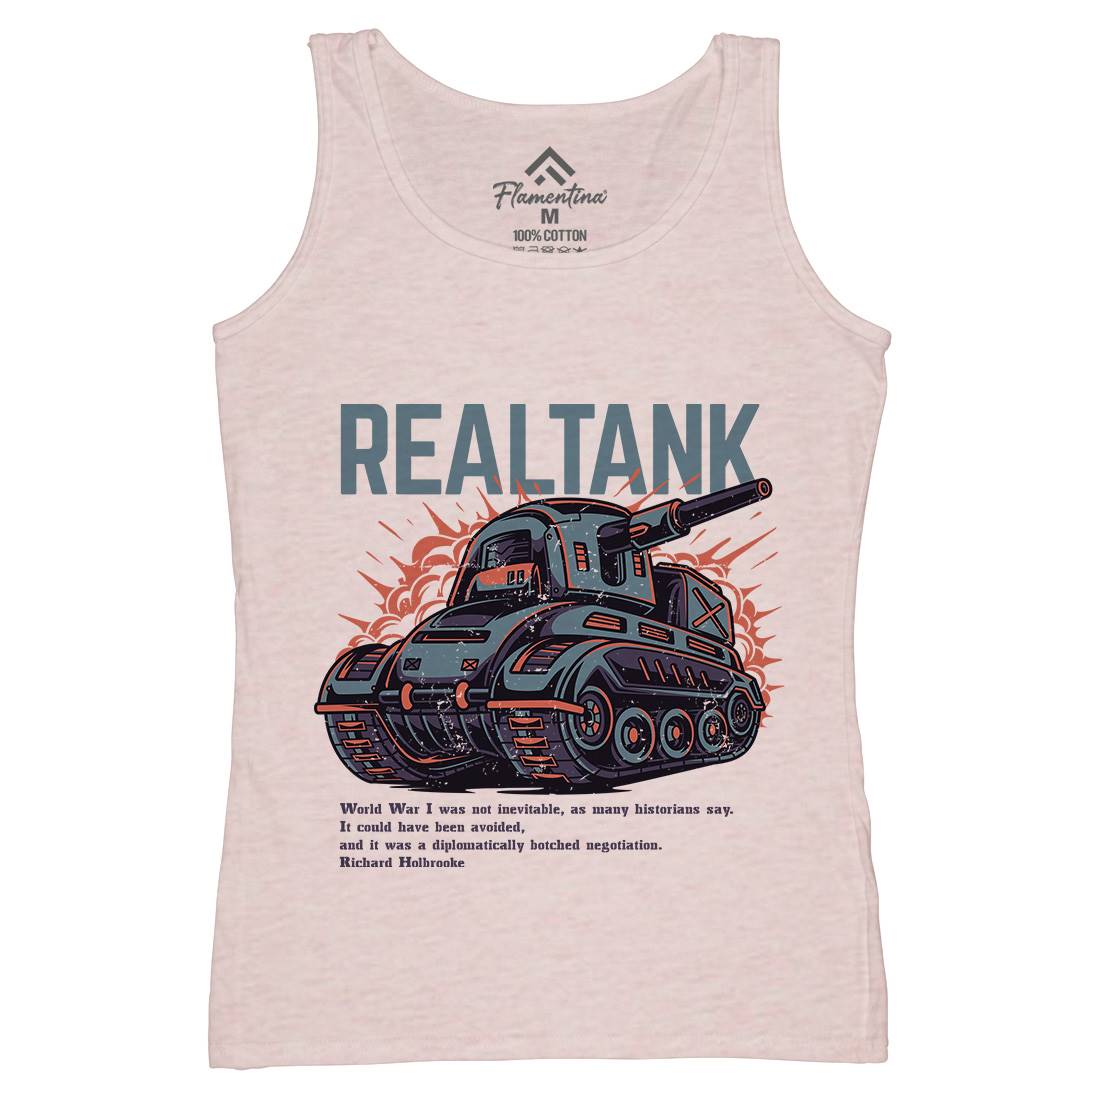 Tank Womens Organic Tank Top Vest Army D691